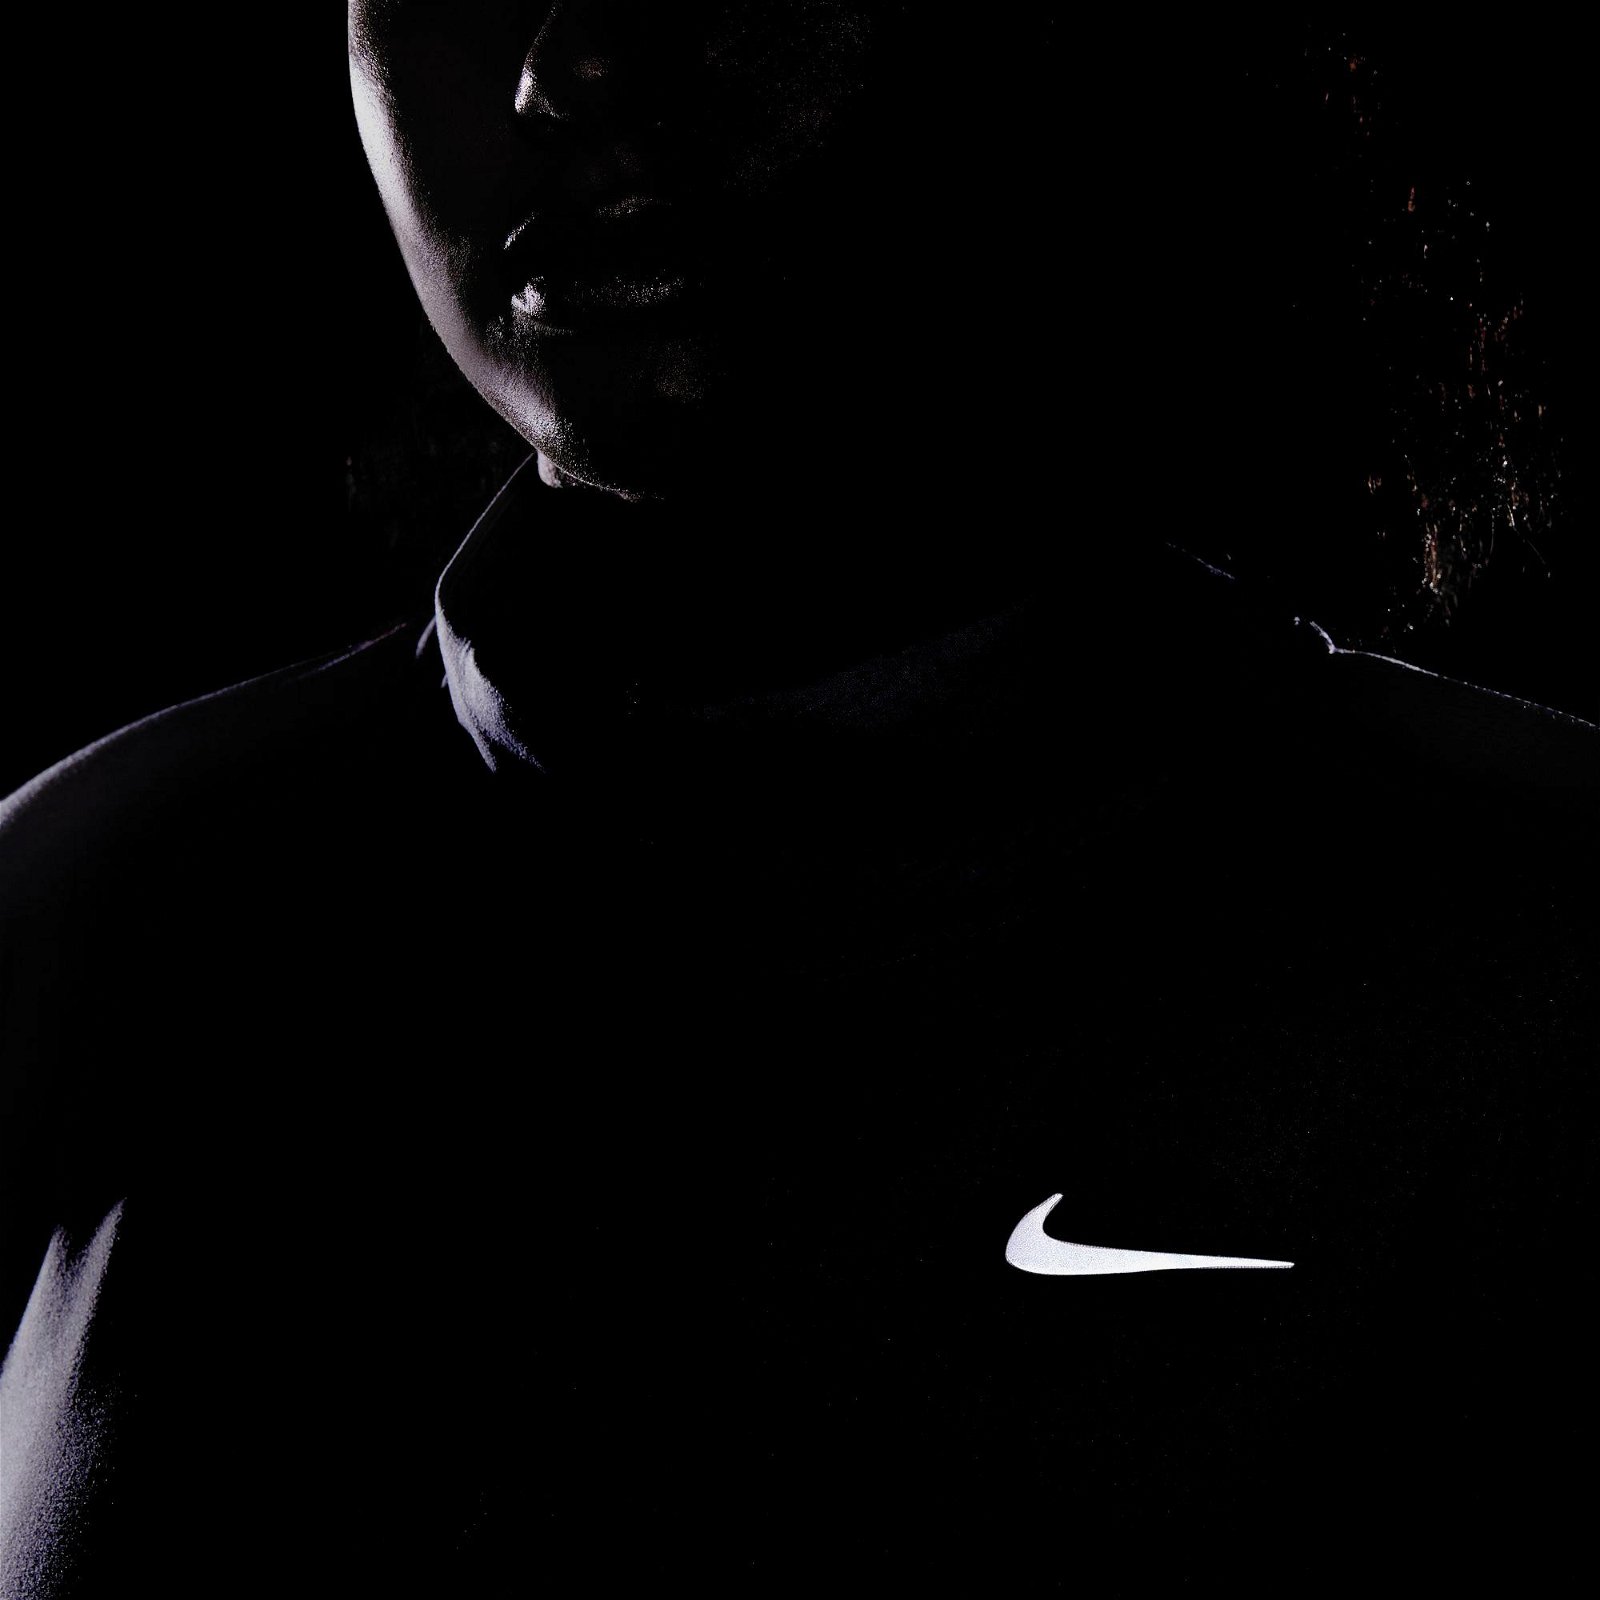 Nike Therma-Fit Run Division Sphr Element Top Kadın Gri Sweatshirt